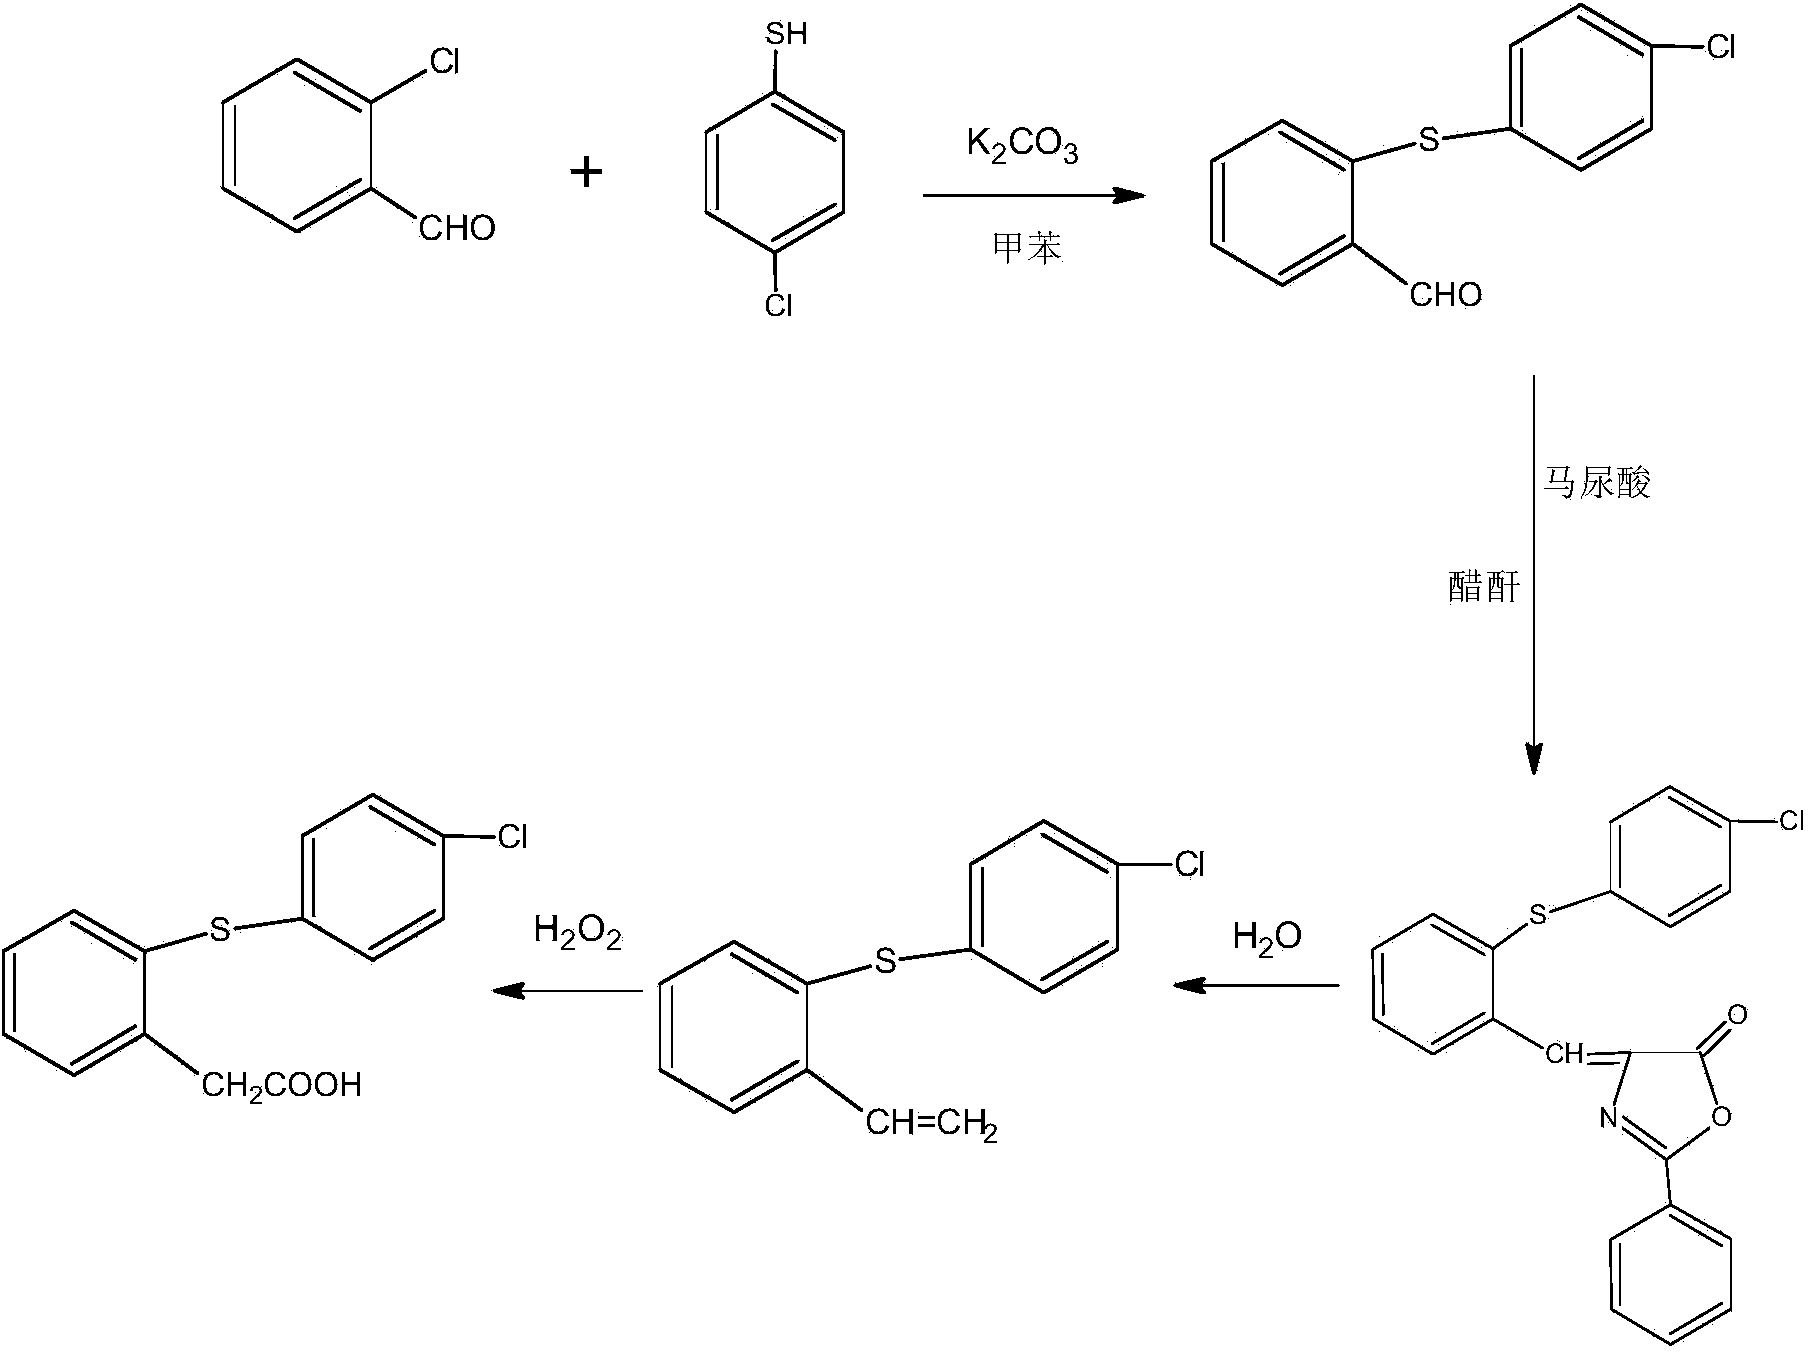 Method for preparing phenylthioacetate